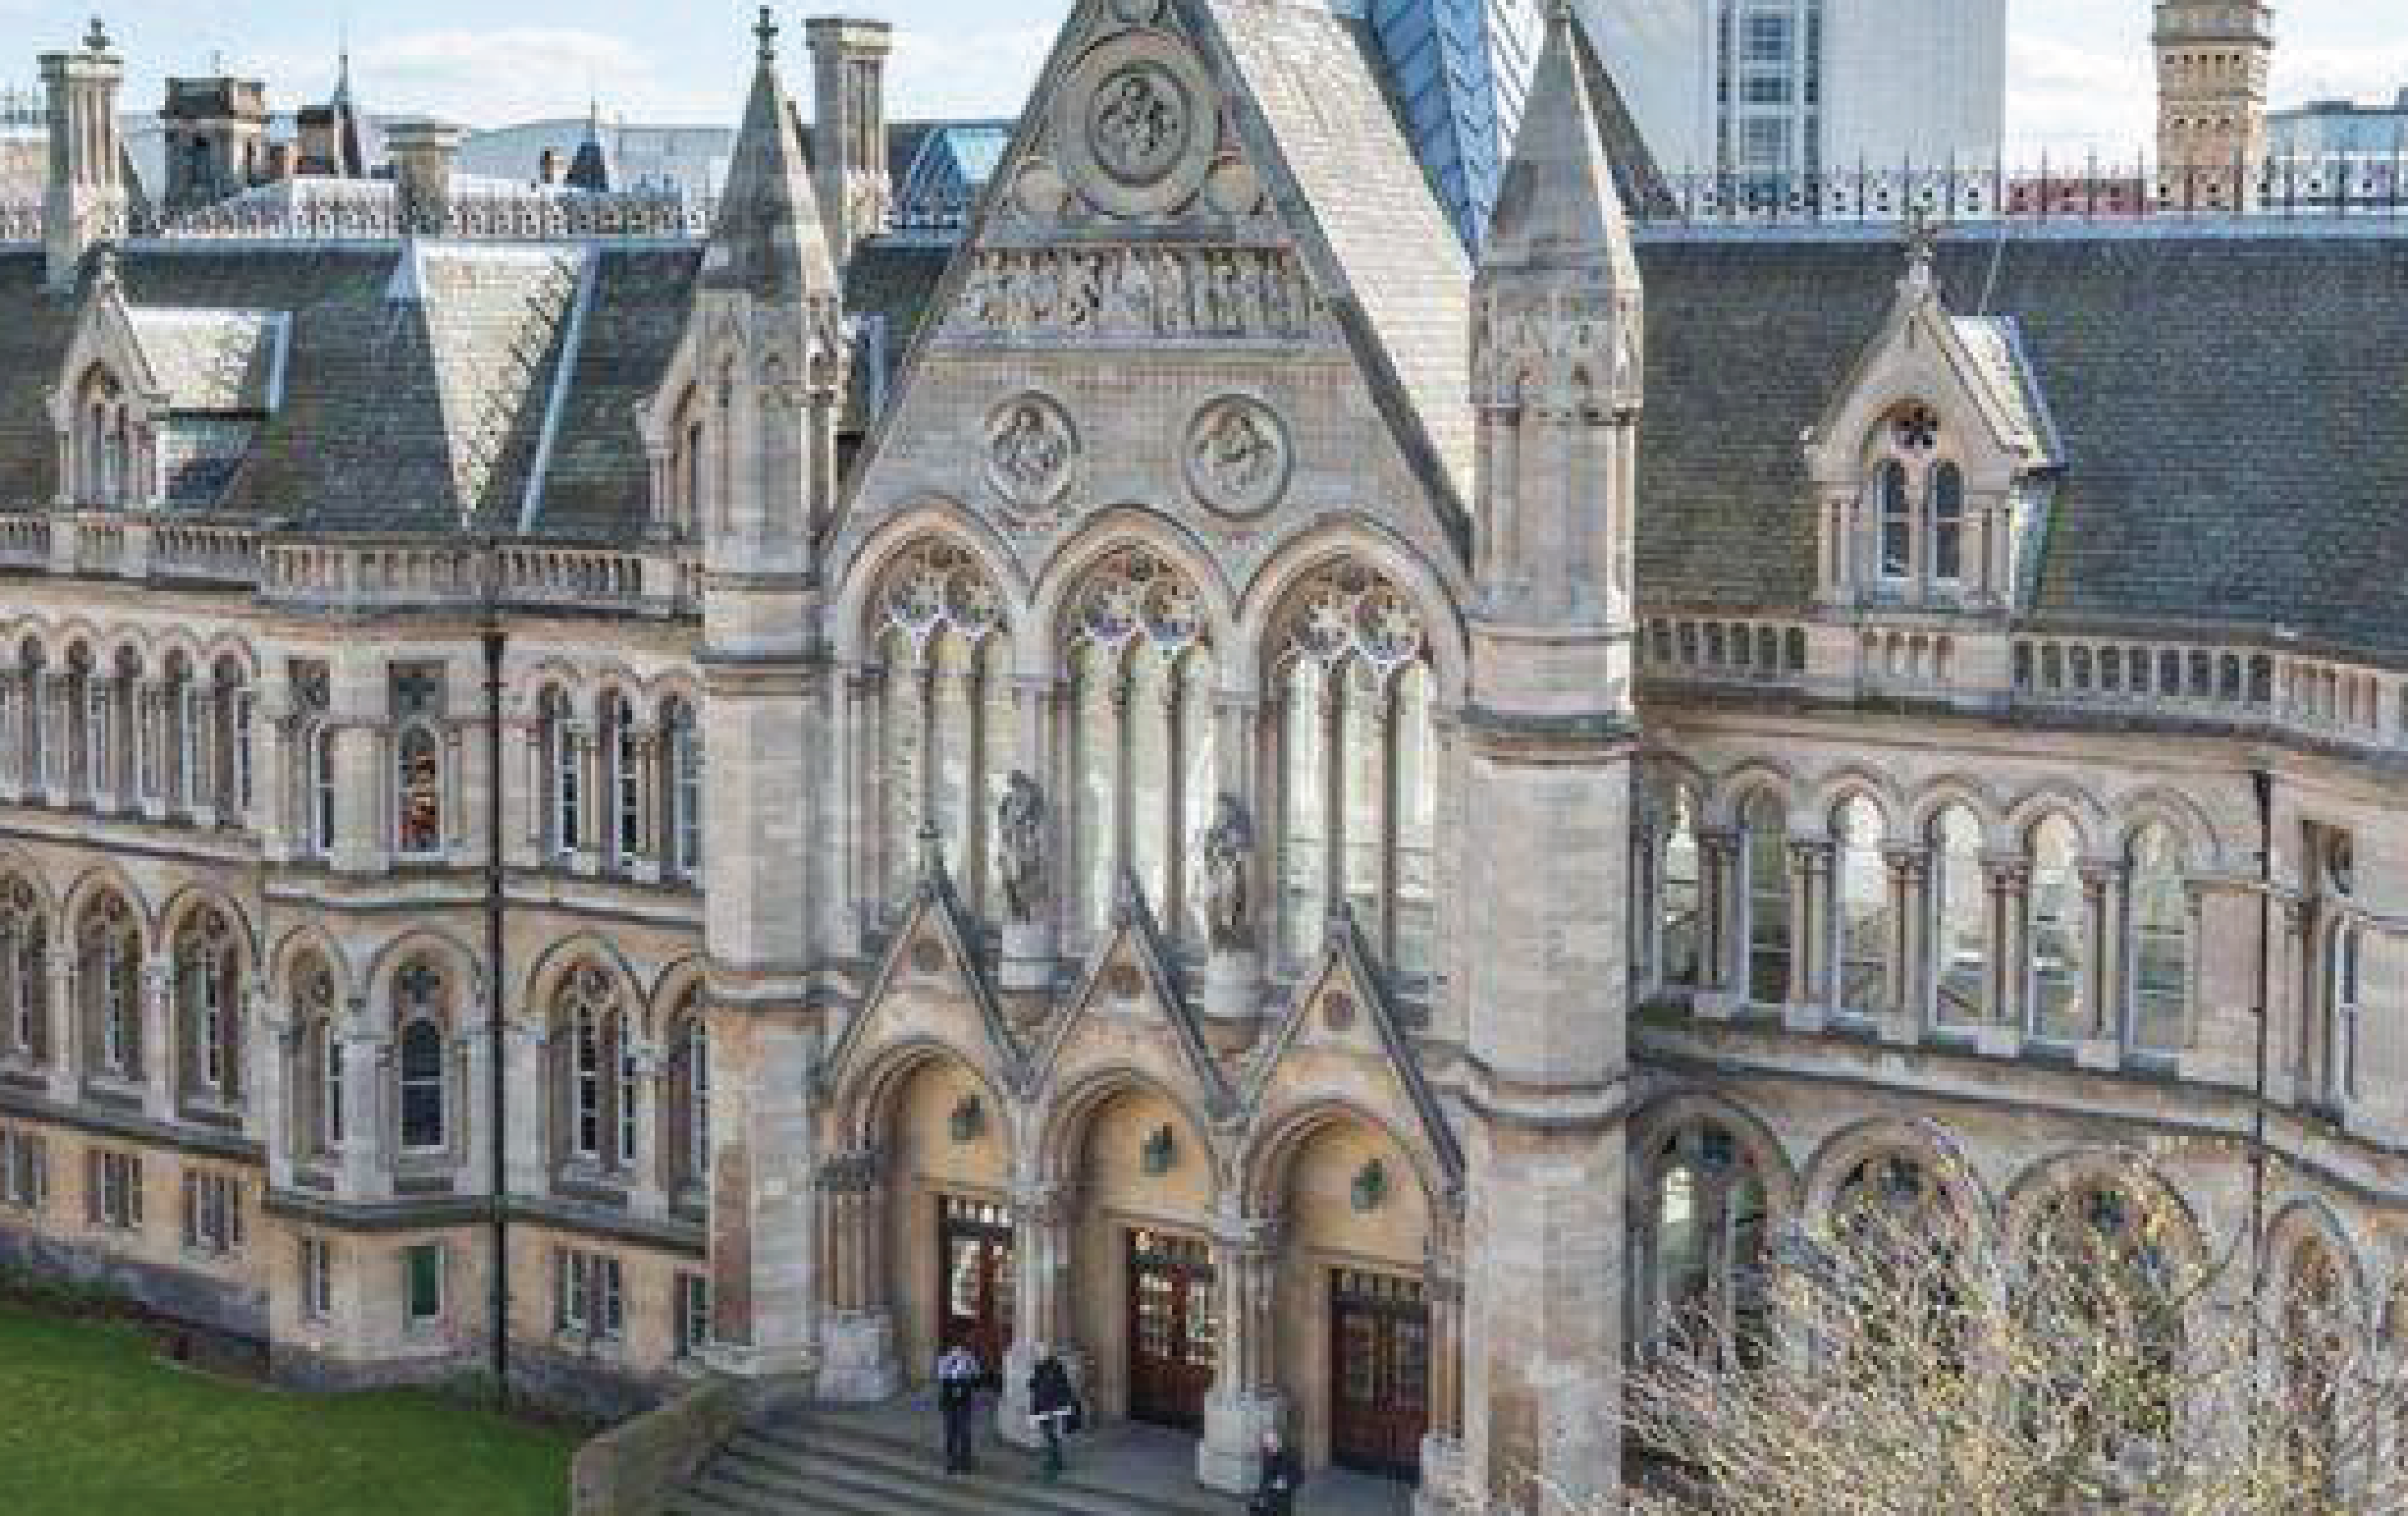 Nottingham Trent University offers scholarships to social changemakers